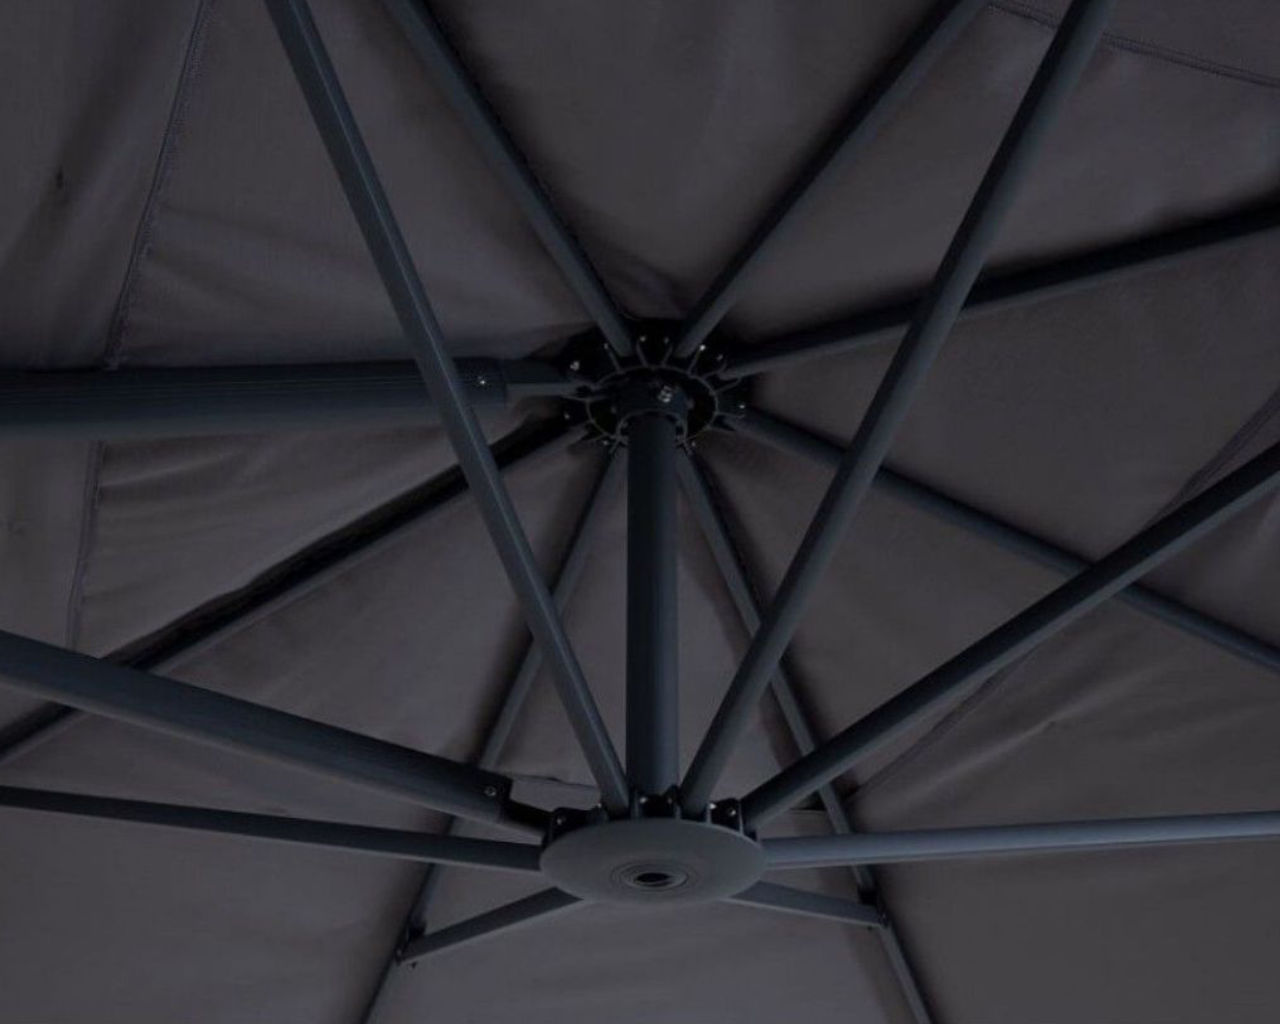 Balmoral 3 x 4m Cantilever Umbrella Charcoal, , hi-res image number null